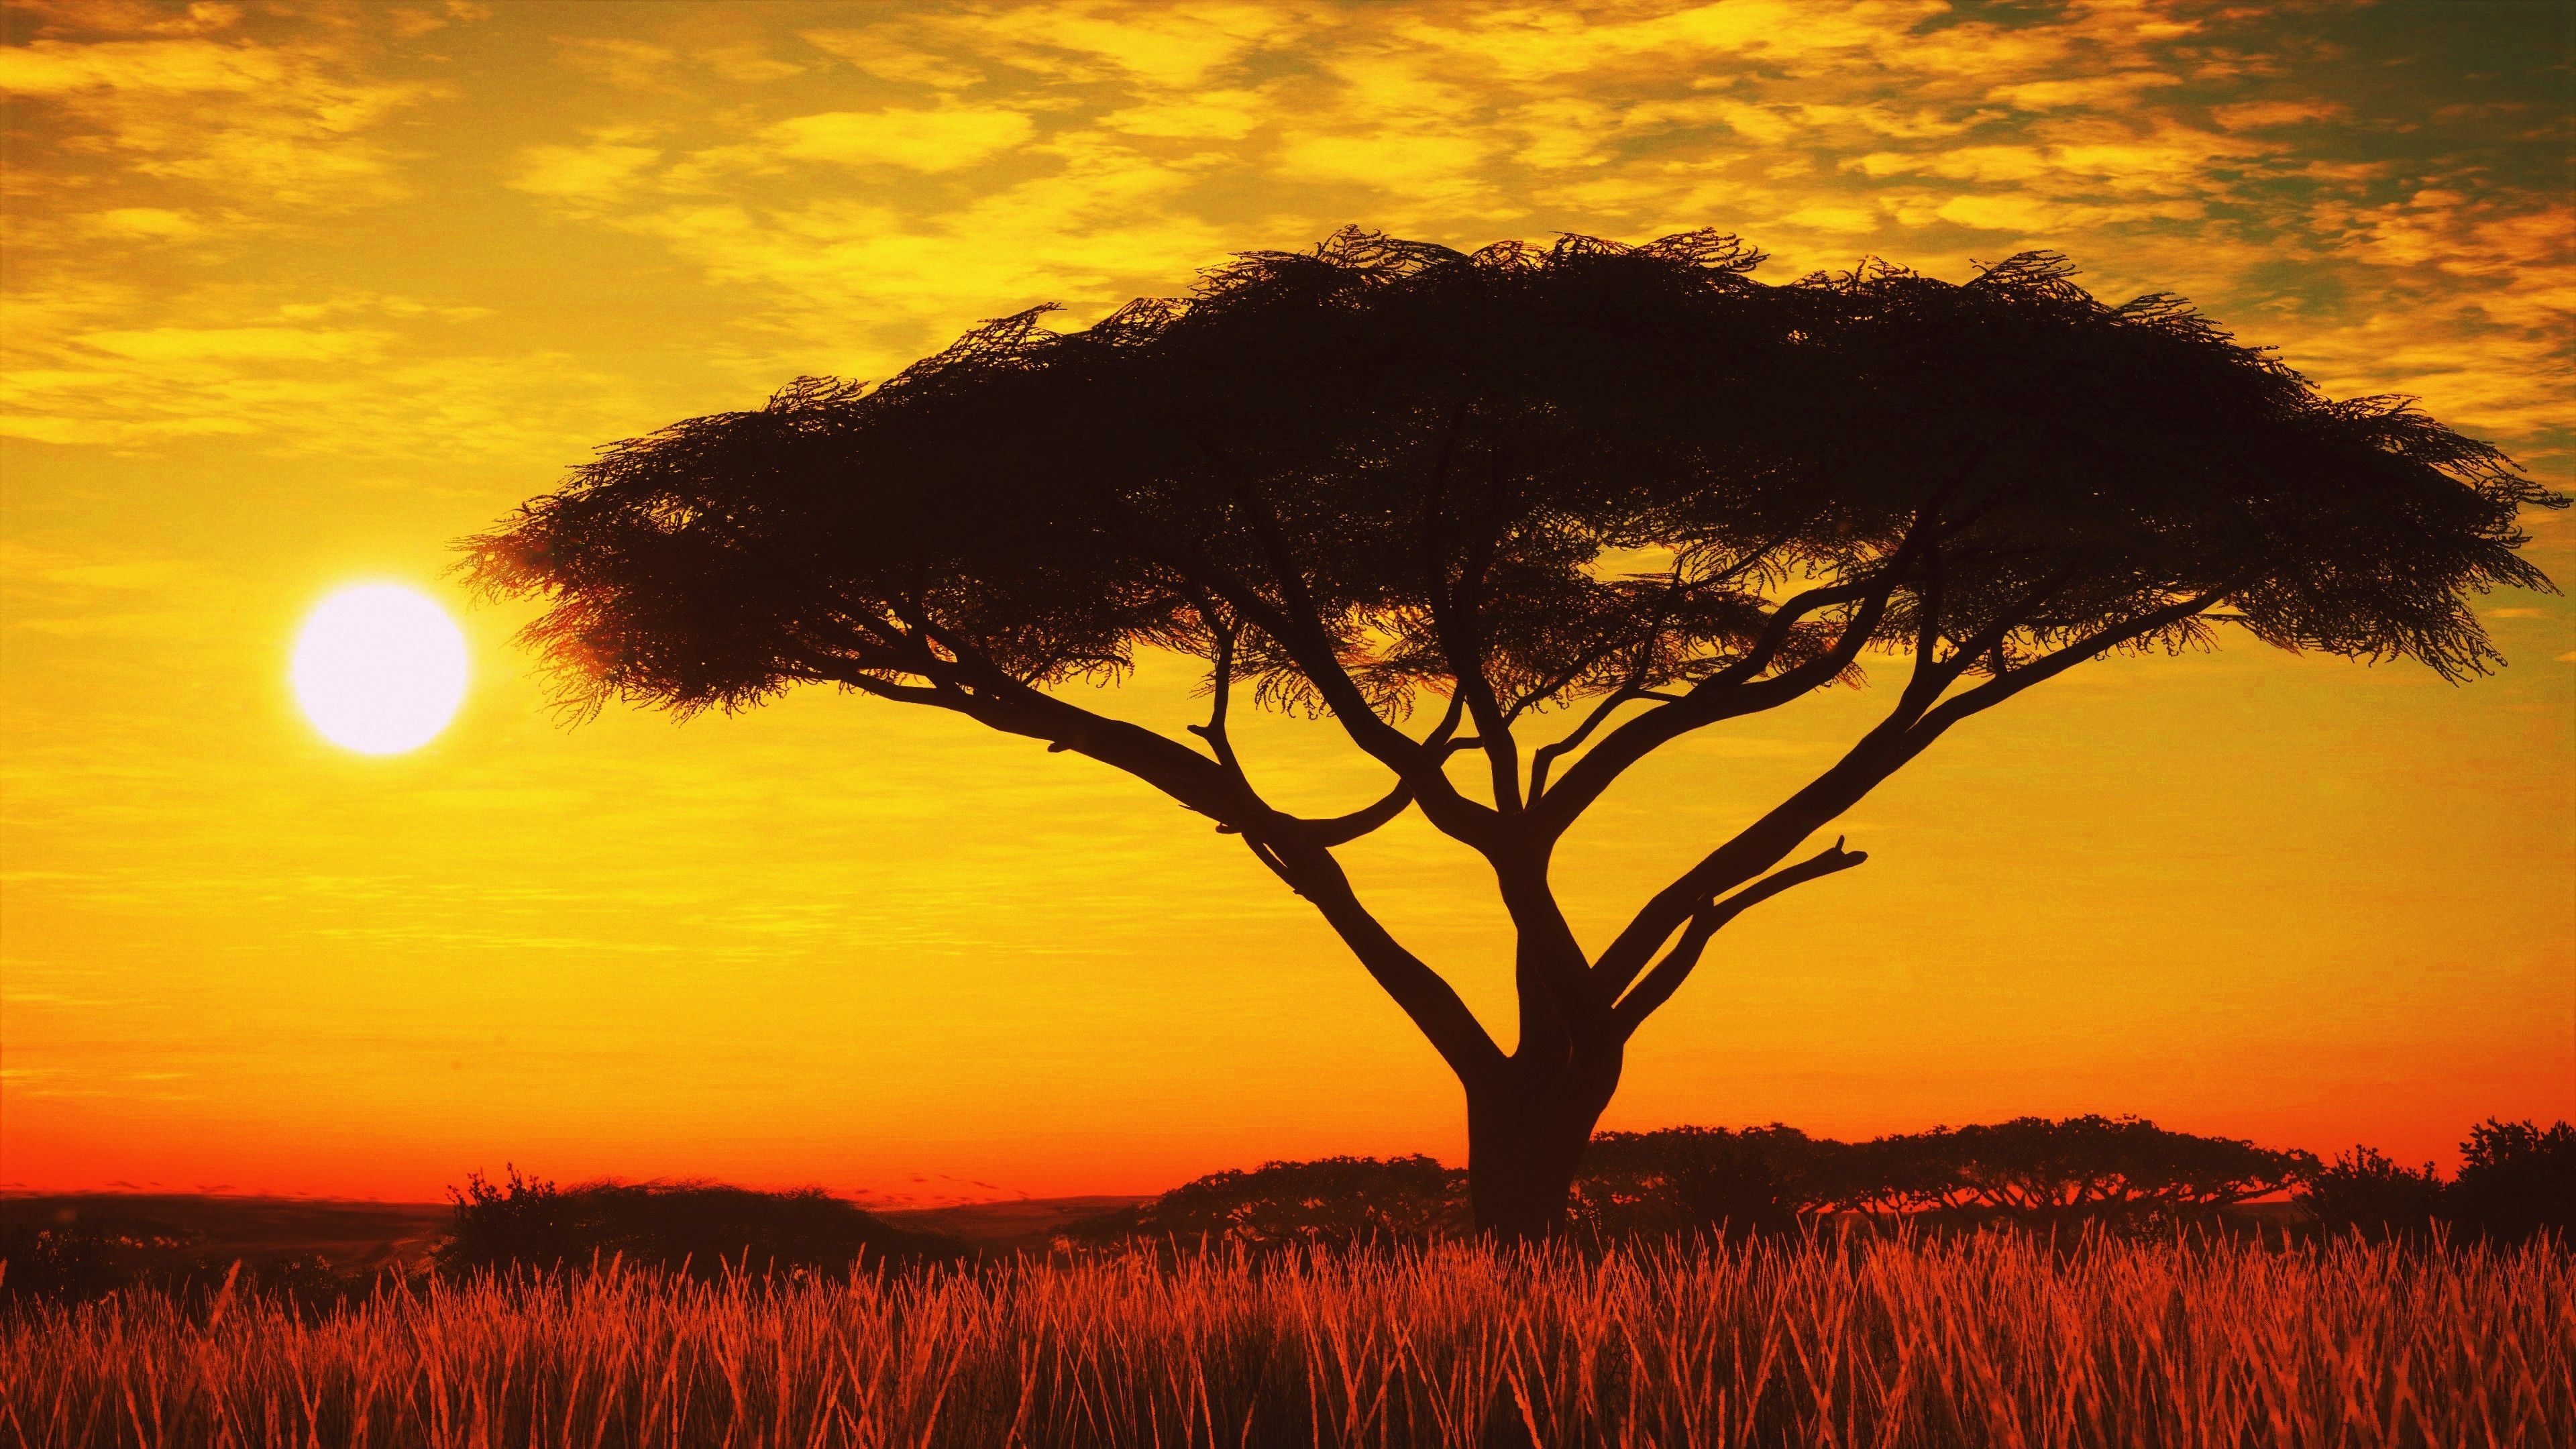 Serengeti National Park, Stunning wallpapers, Free serengeti backgrounds, Natural beauty, 3840x2160 4K Desktop